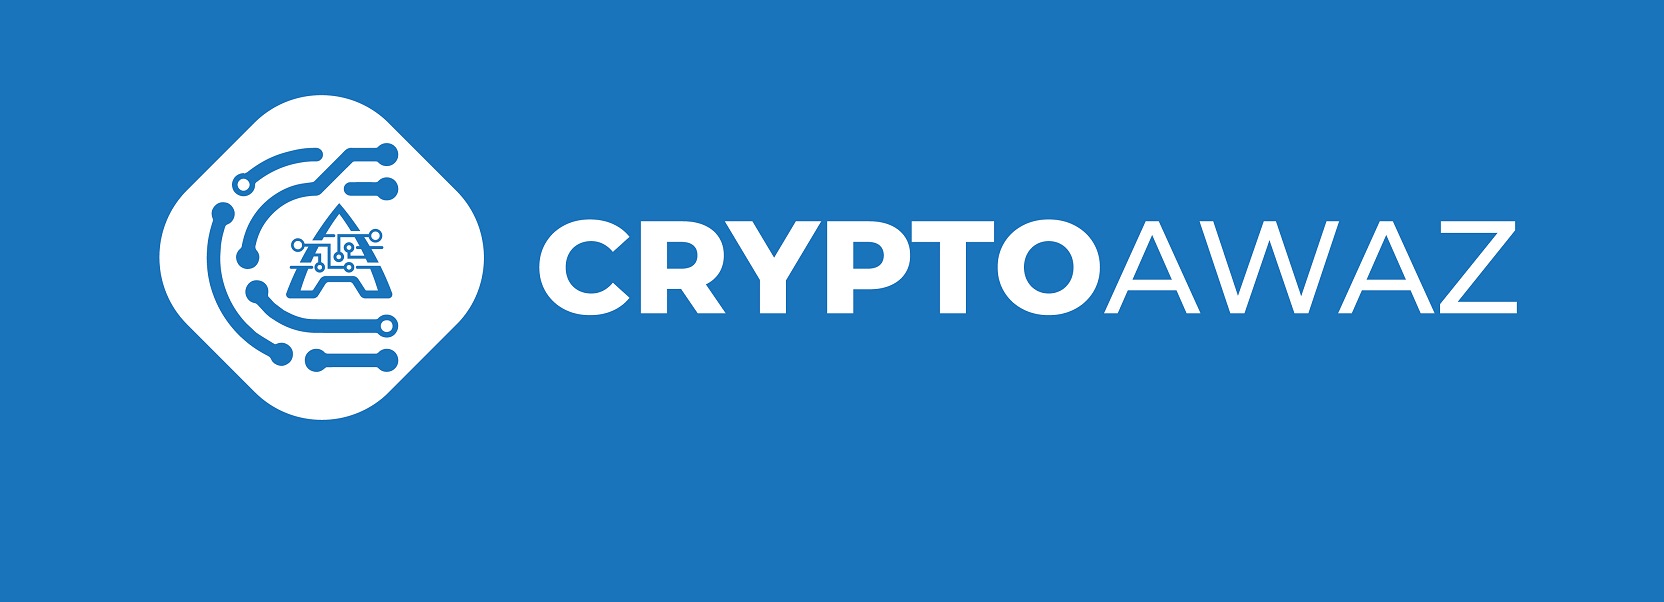 CryptoAwaz Blog Feature